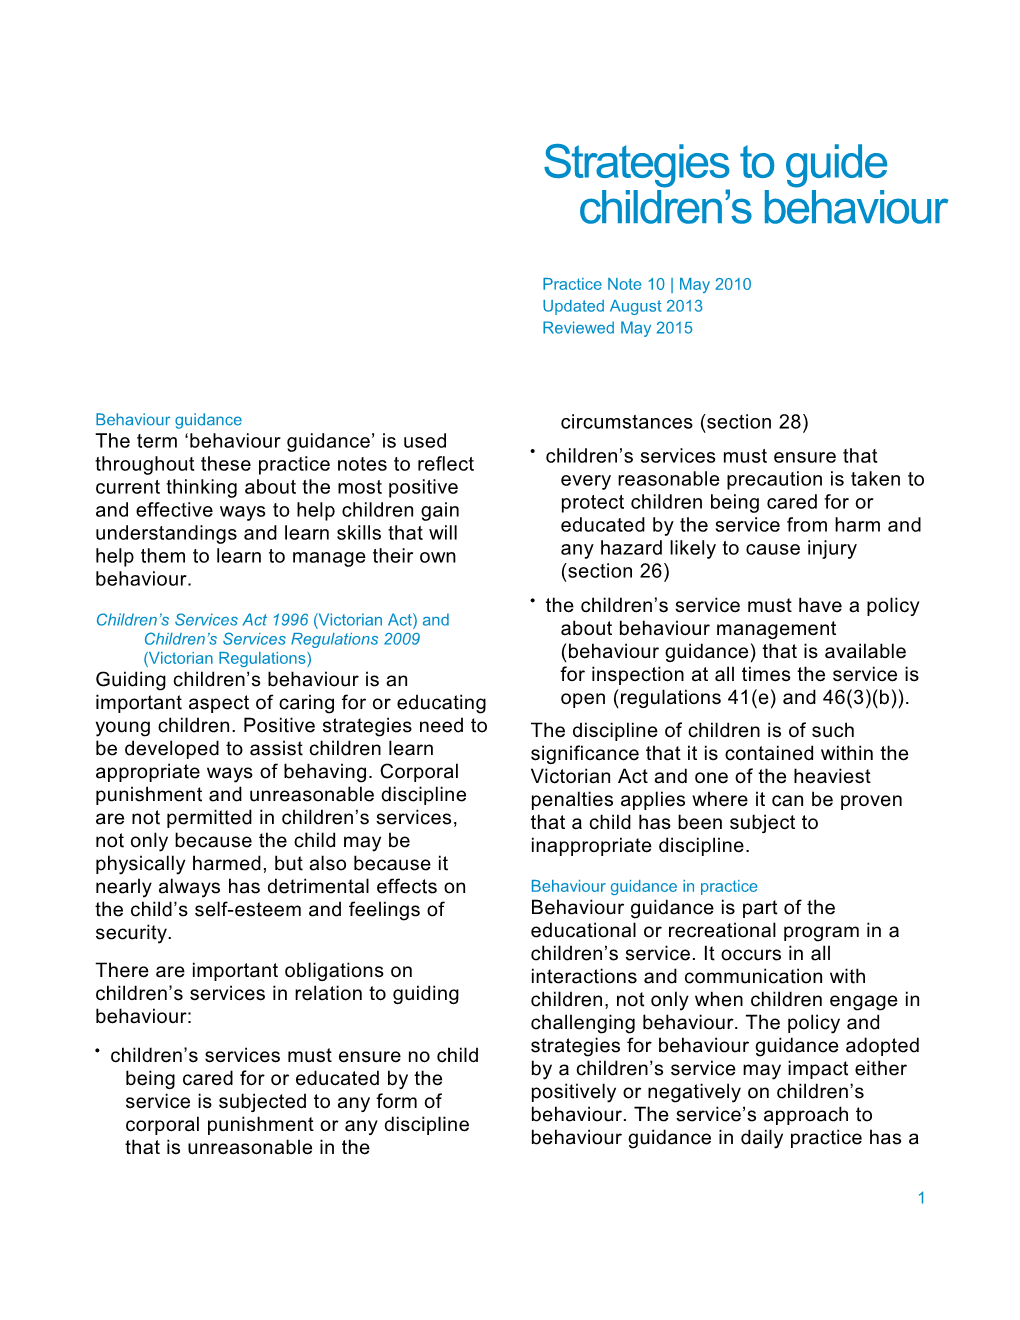 Practice Note - Strategies to Guide Children's Behaviour